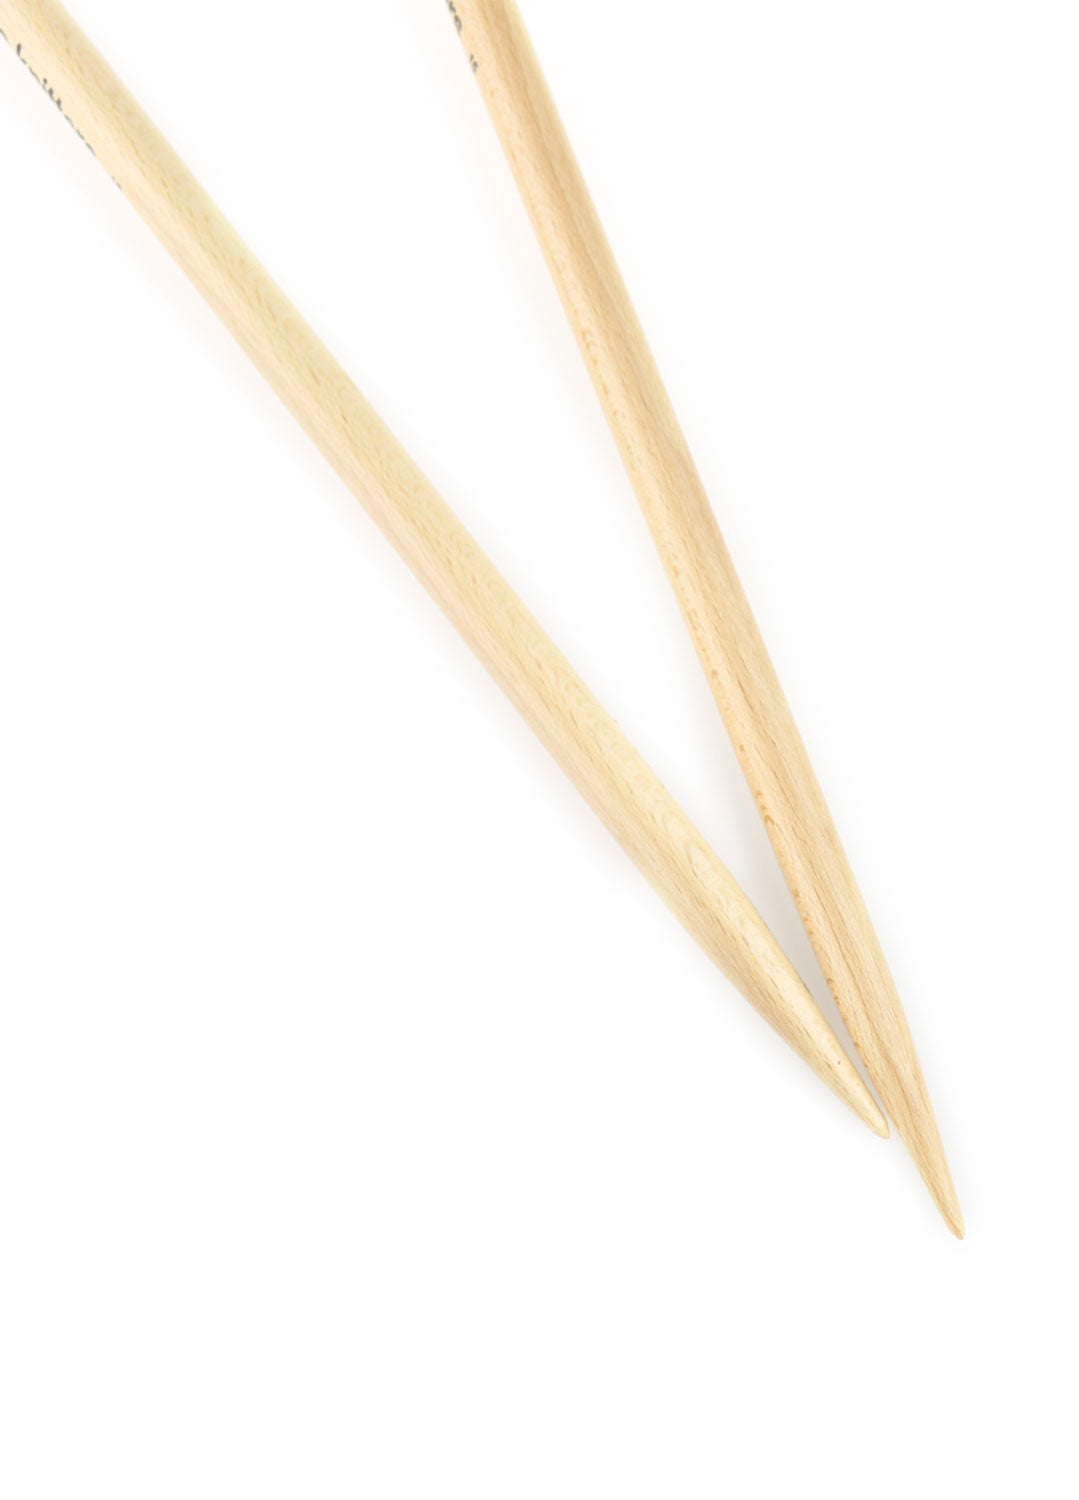 15mm Circular Beechwood Knitting Needles